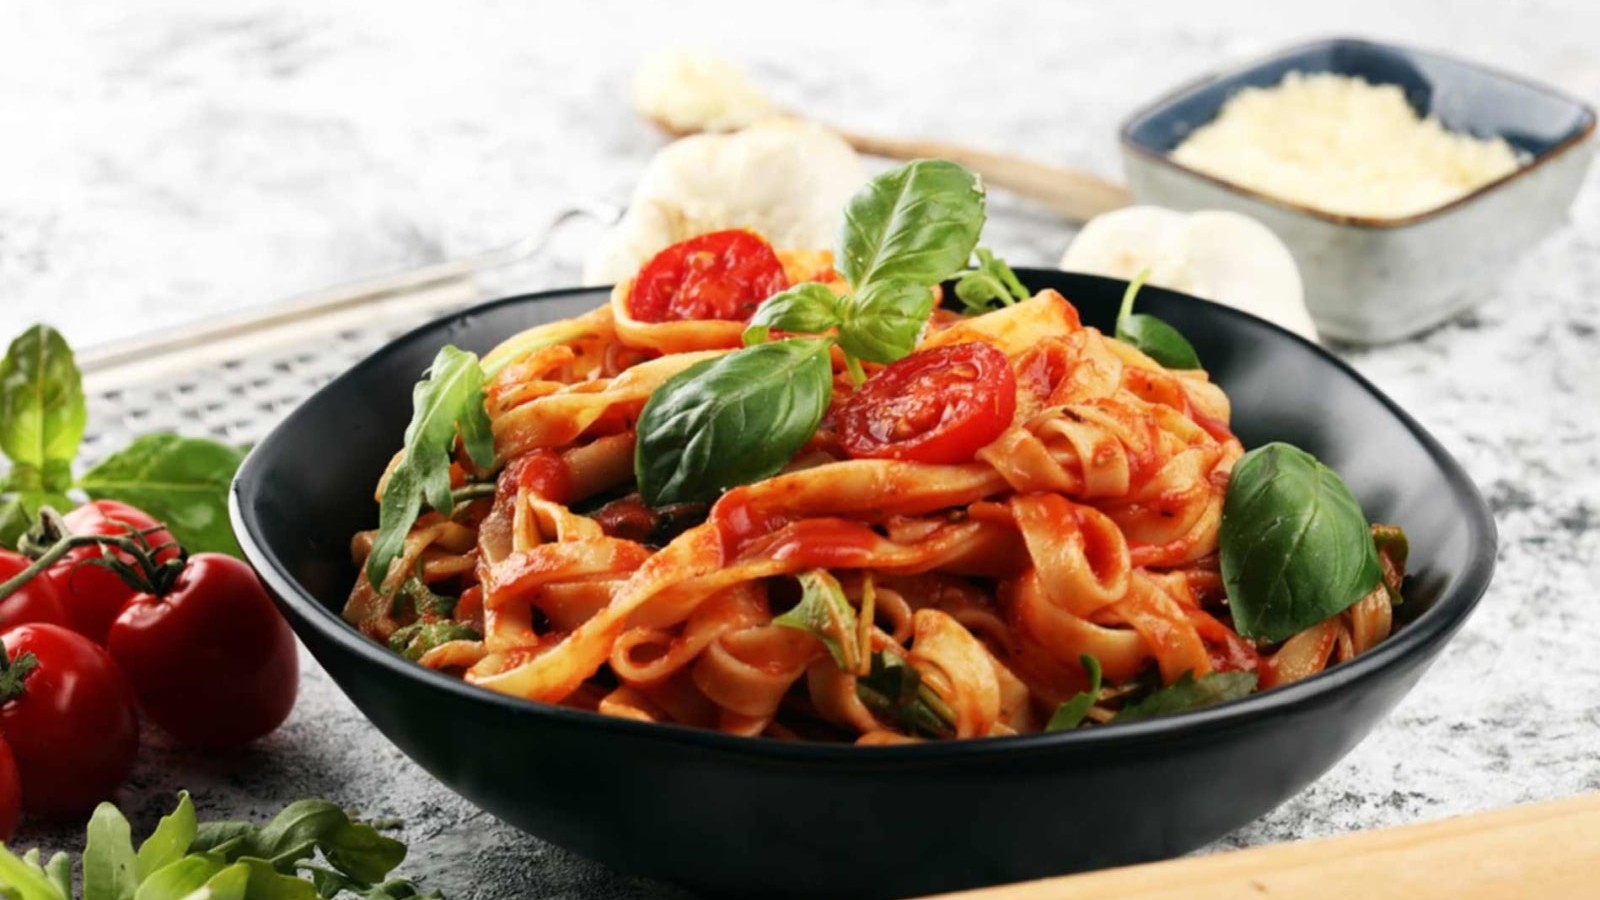 Image of Northern Italian Tagliatelle Pasta with a Garlic Tomato Sauce